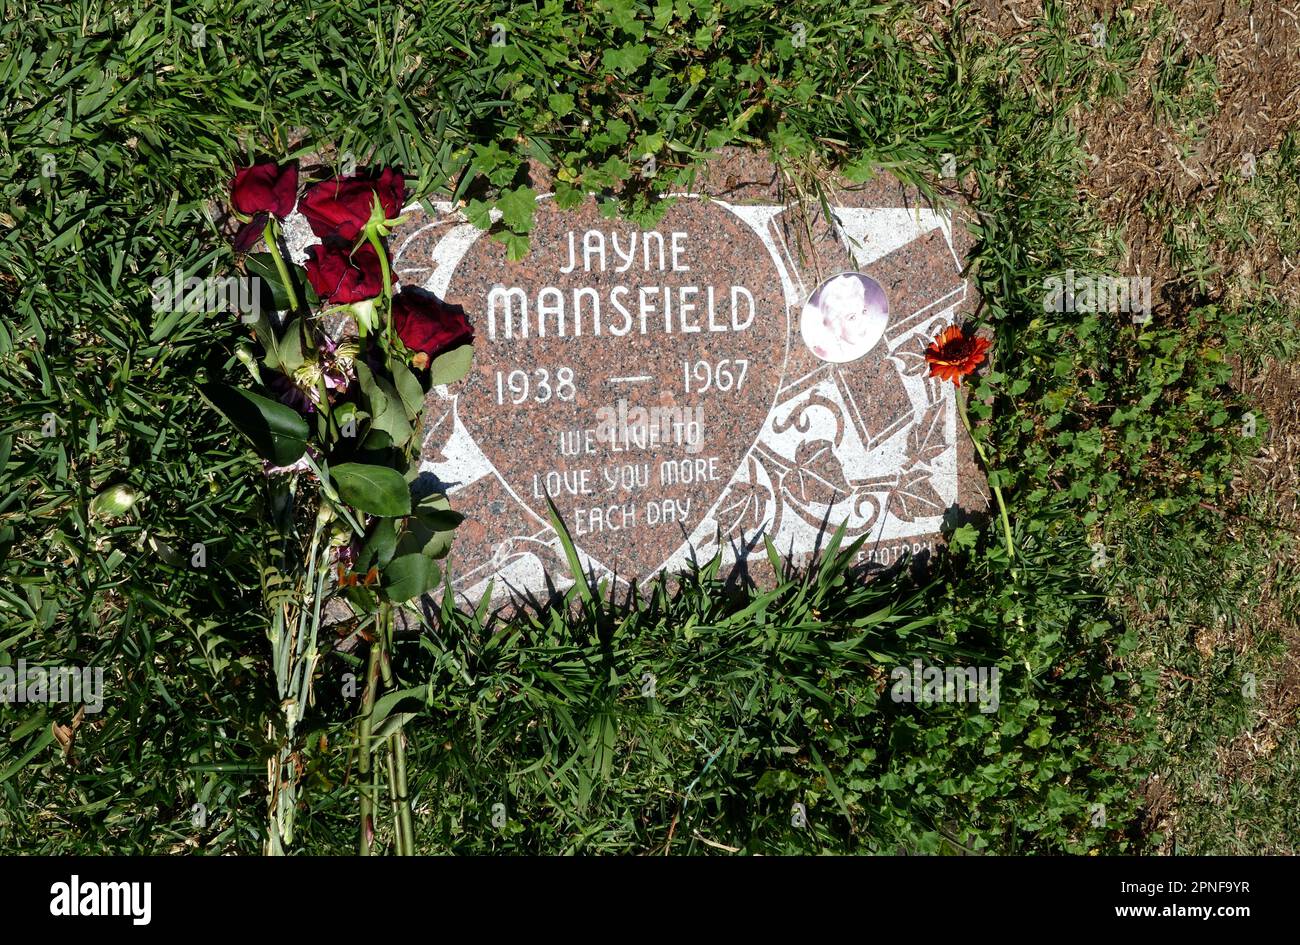 Los Angeles, Kalifornien, USA 16. April 2023 Schauspielerin Jayne Mansfield Cenotaph in Garden of Legends auf dem Hollywood Forever Cemetery am 16. April 2023 in Los Angeles, Kalifornien, USA. Foto: Barry King/Alamy Stock Photo Stockfoto